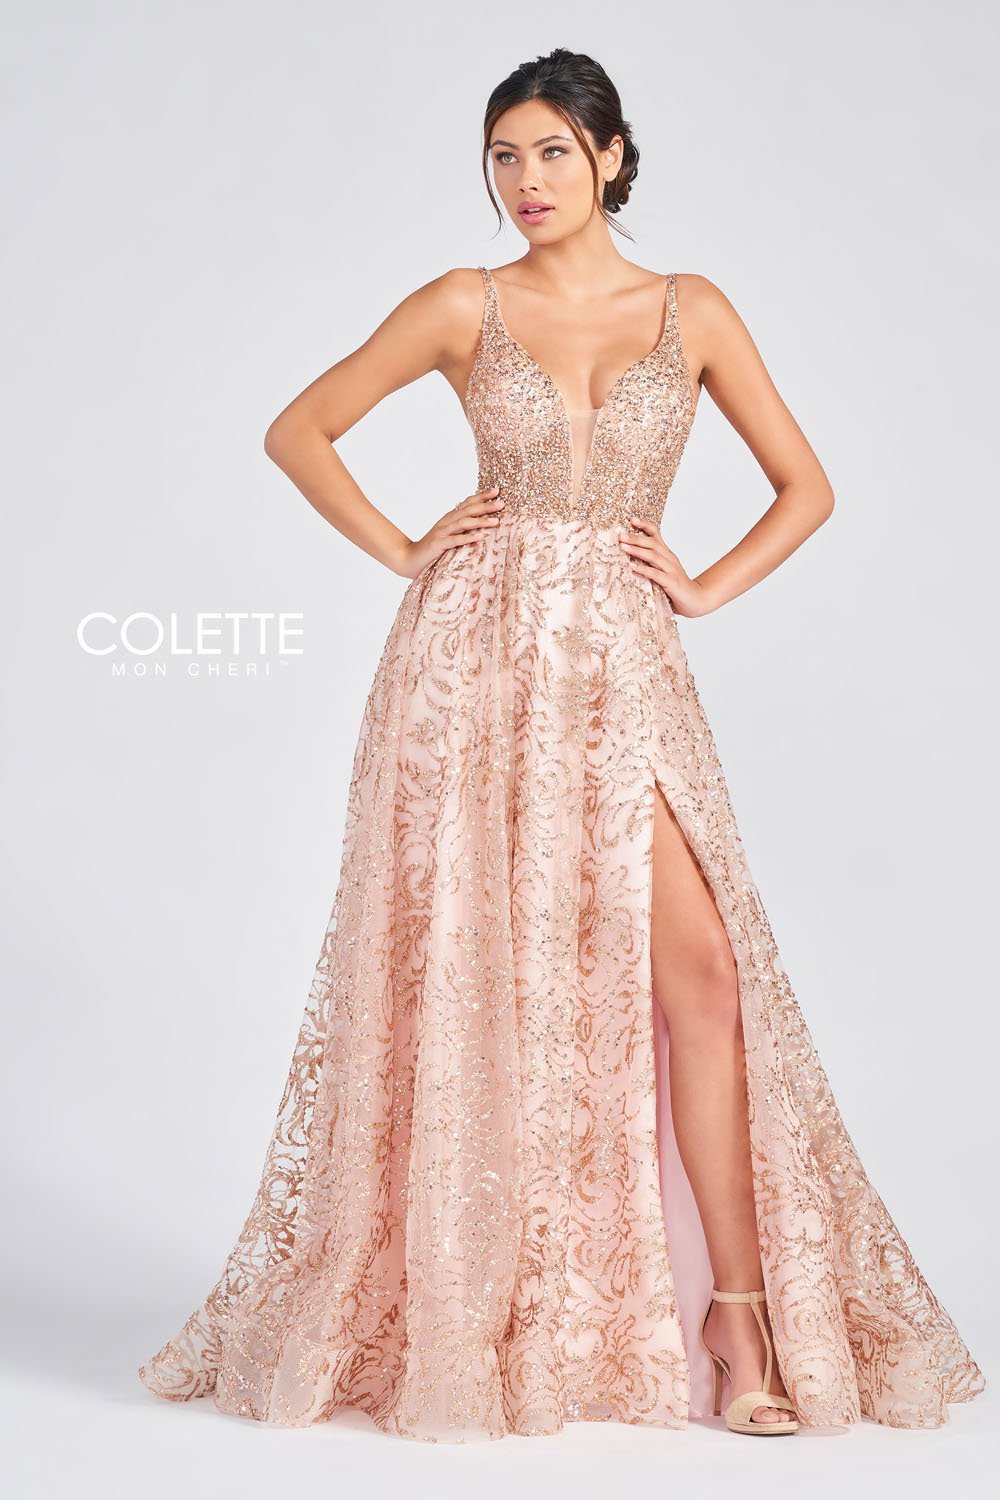 Colette CL12257 Blush Rose Gold prom dresses.  Blush Rose Gold prom dresses image by Colette.